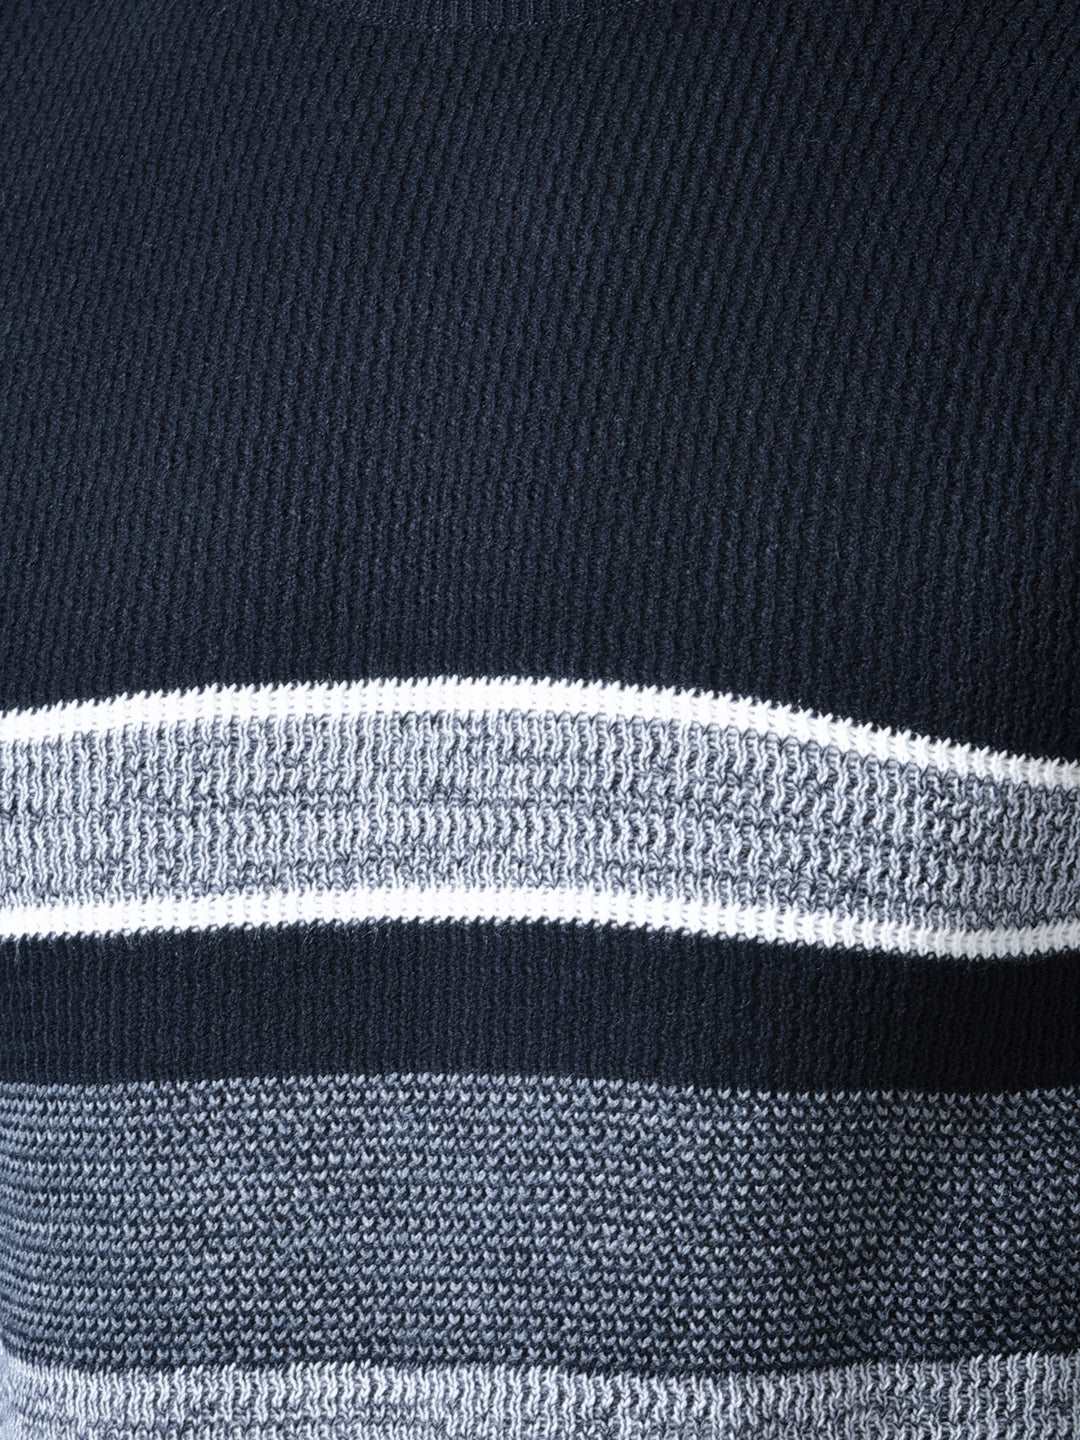 Cobb Black Striped Round Neck Sweater